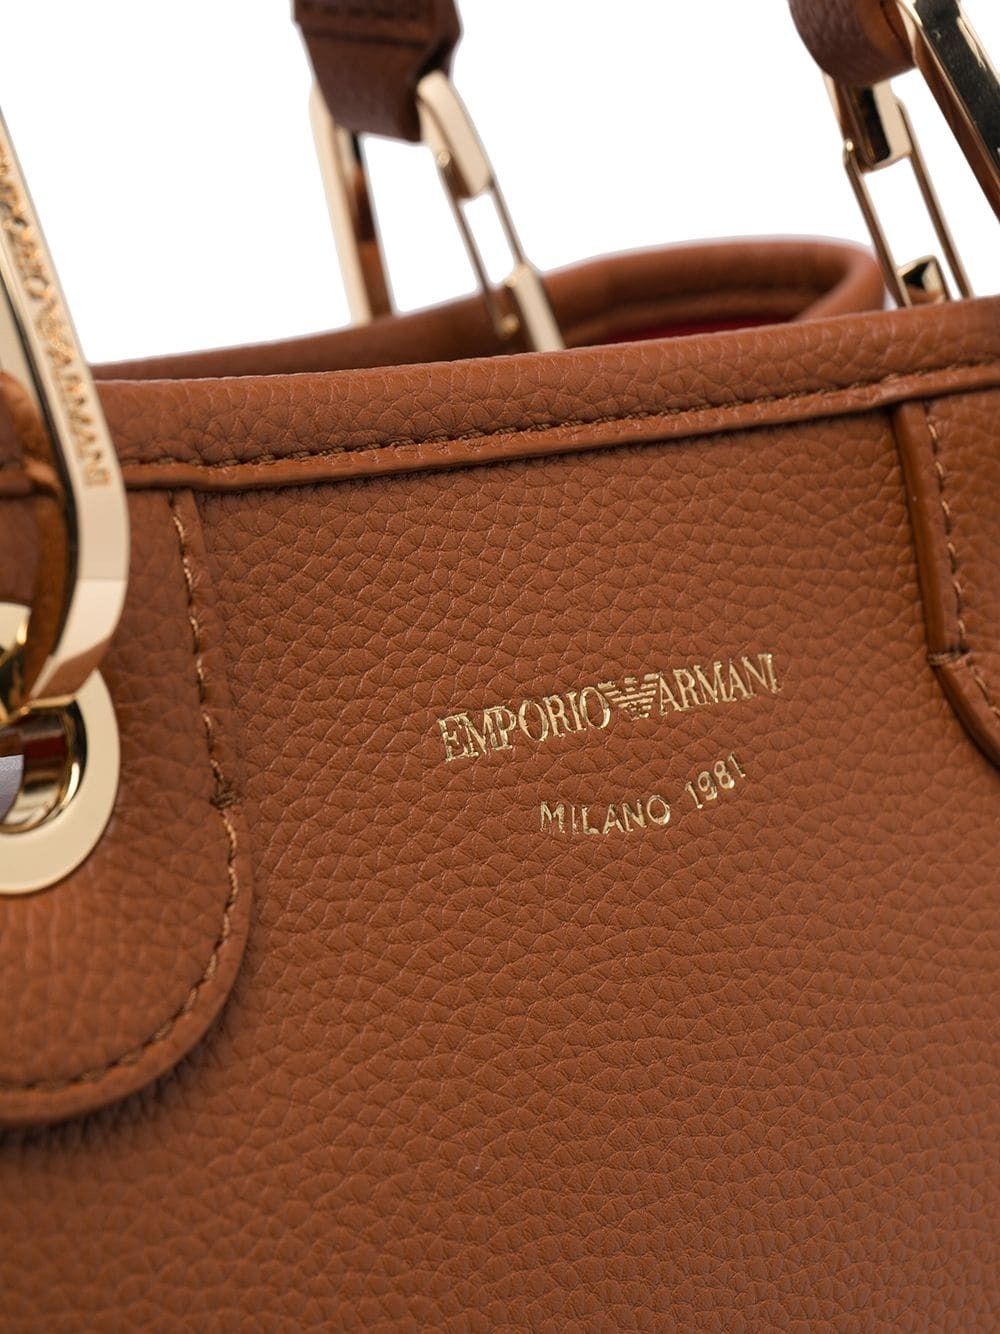 EMPORIO ARMANI - Myea Small Shopping Bag